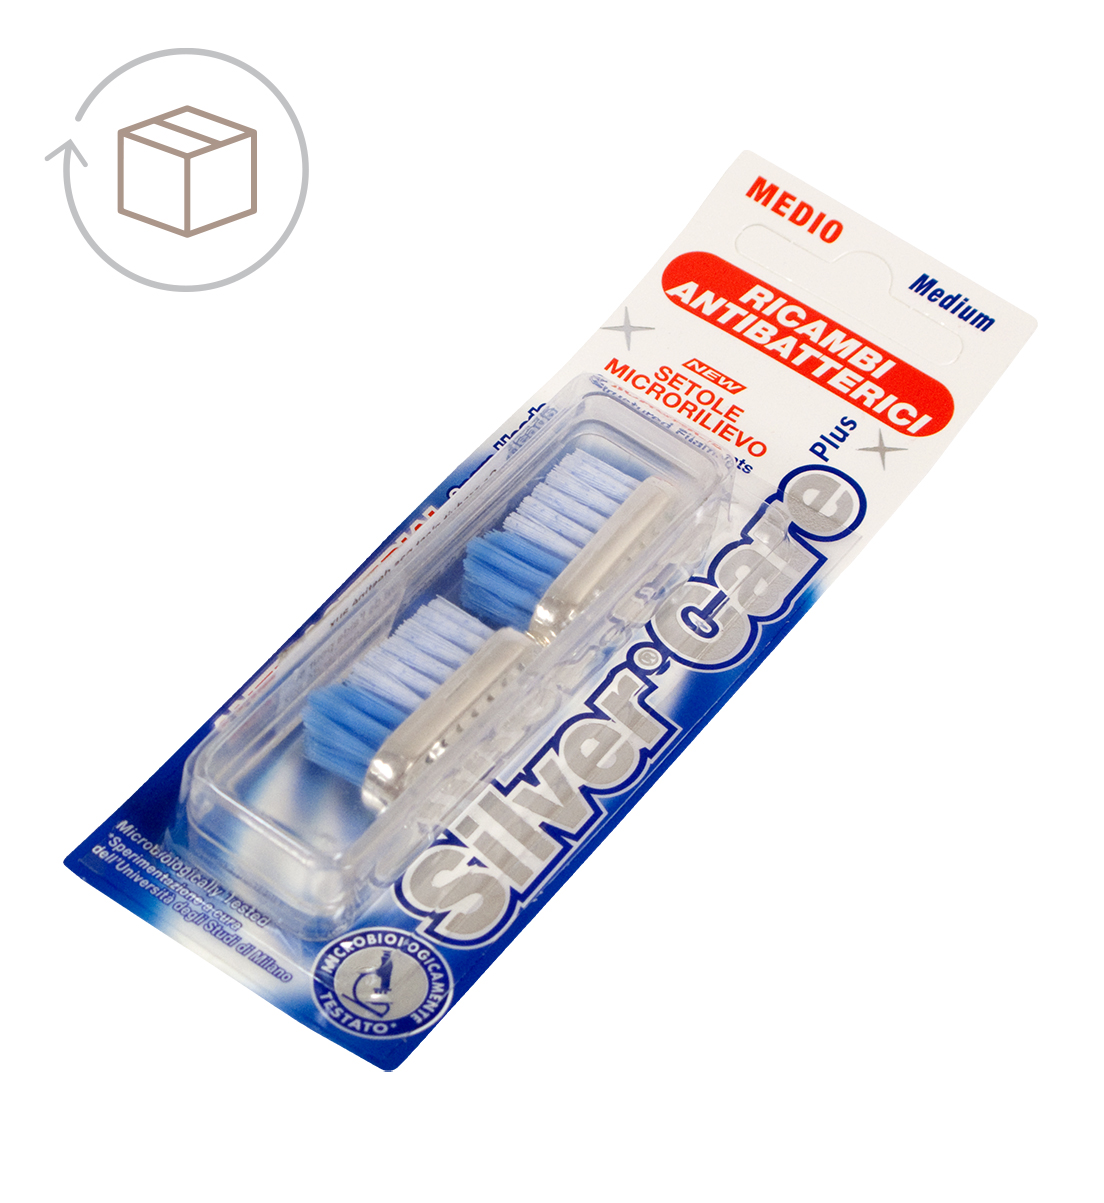 Adult Silver Care Toothbrush Refills, medium